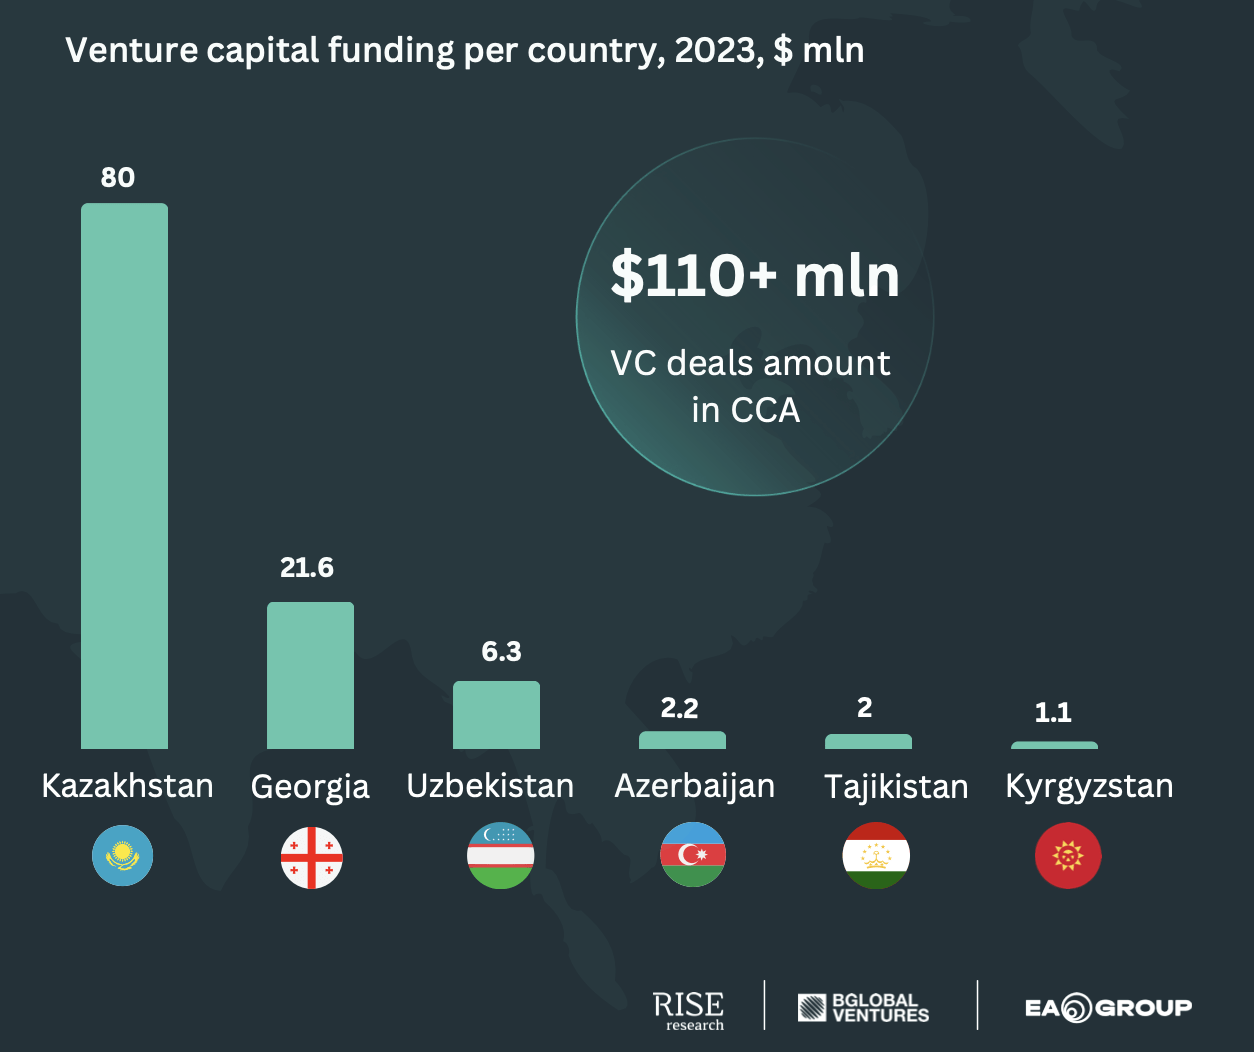 Venture capital funding per country 2023